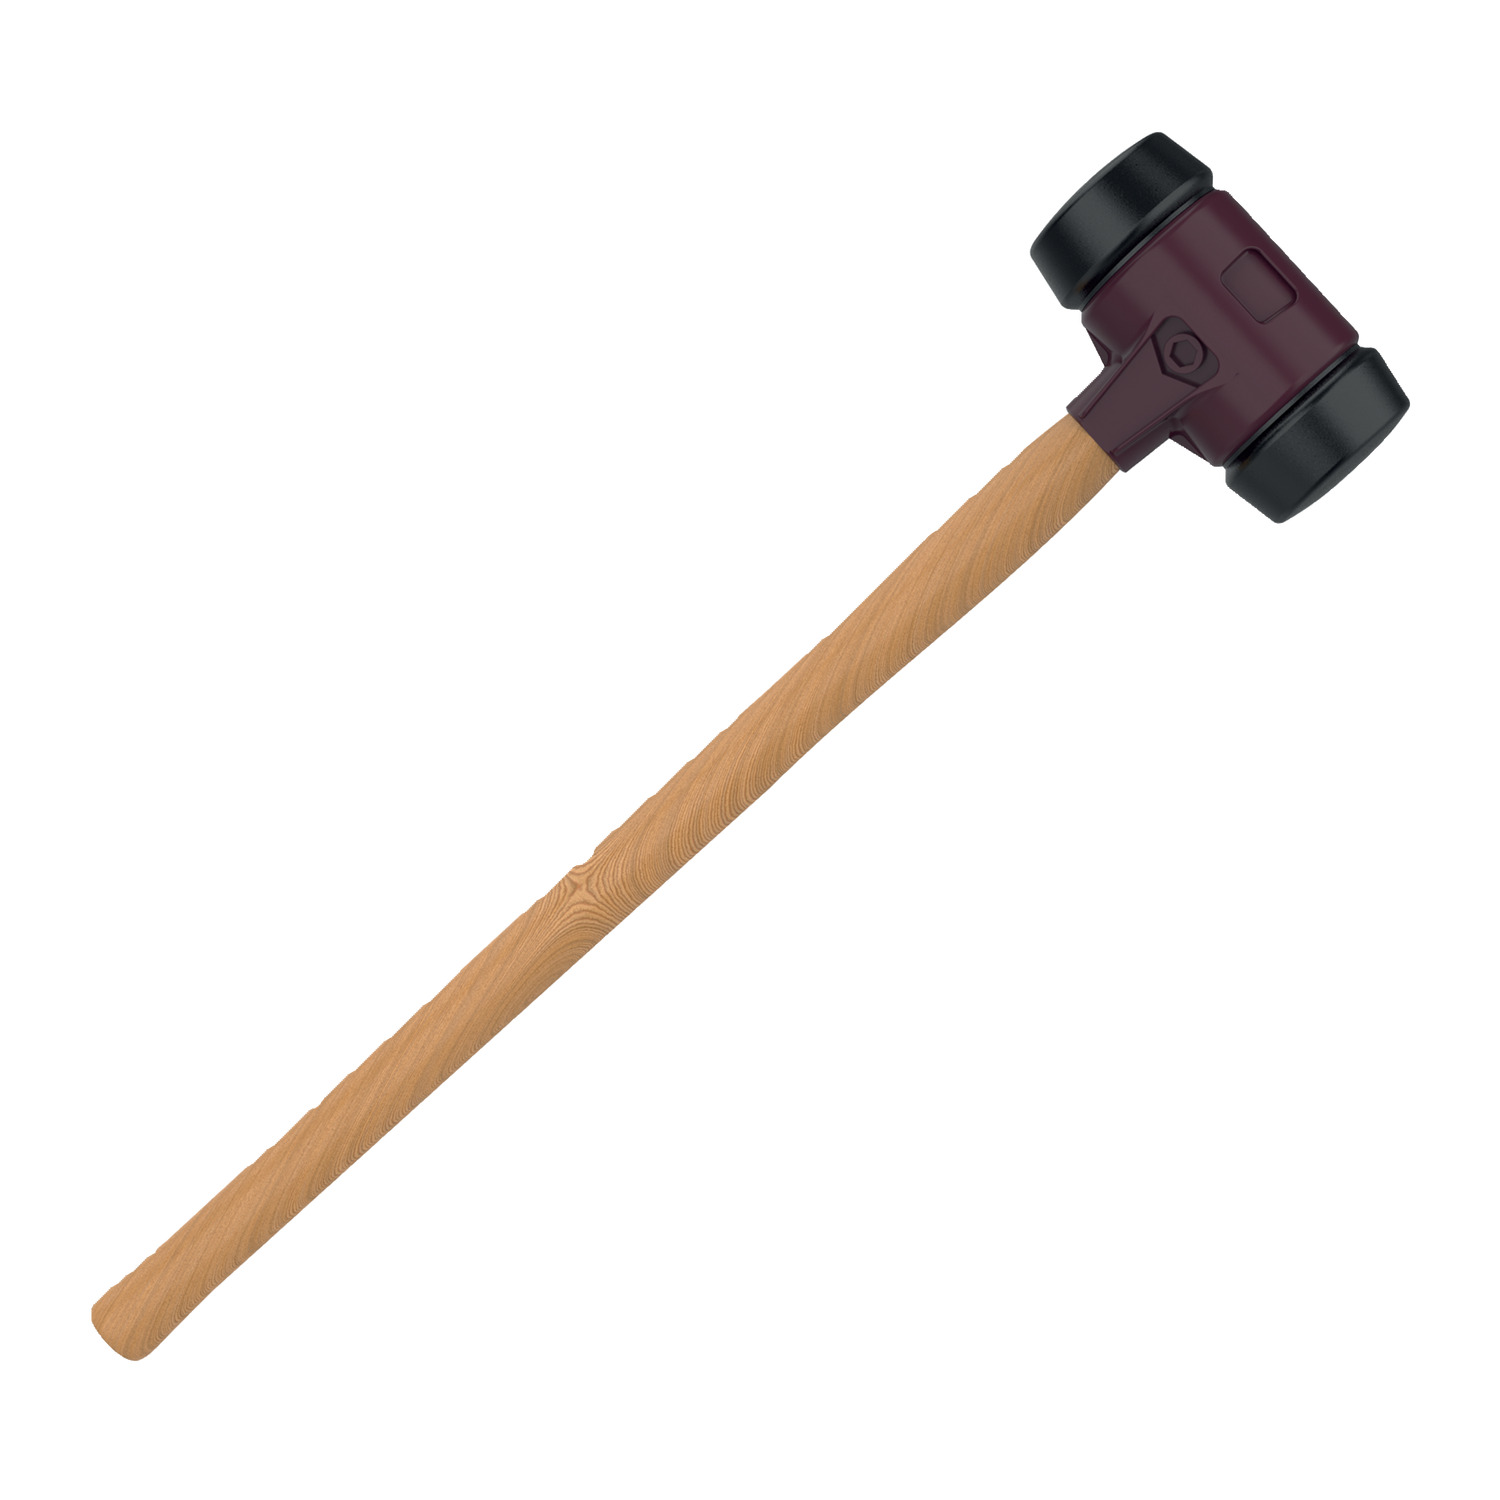 98201 - Simplex Sledge Hammer - Complete